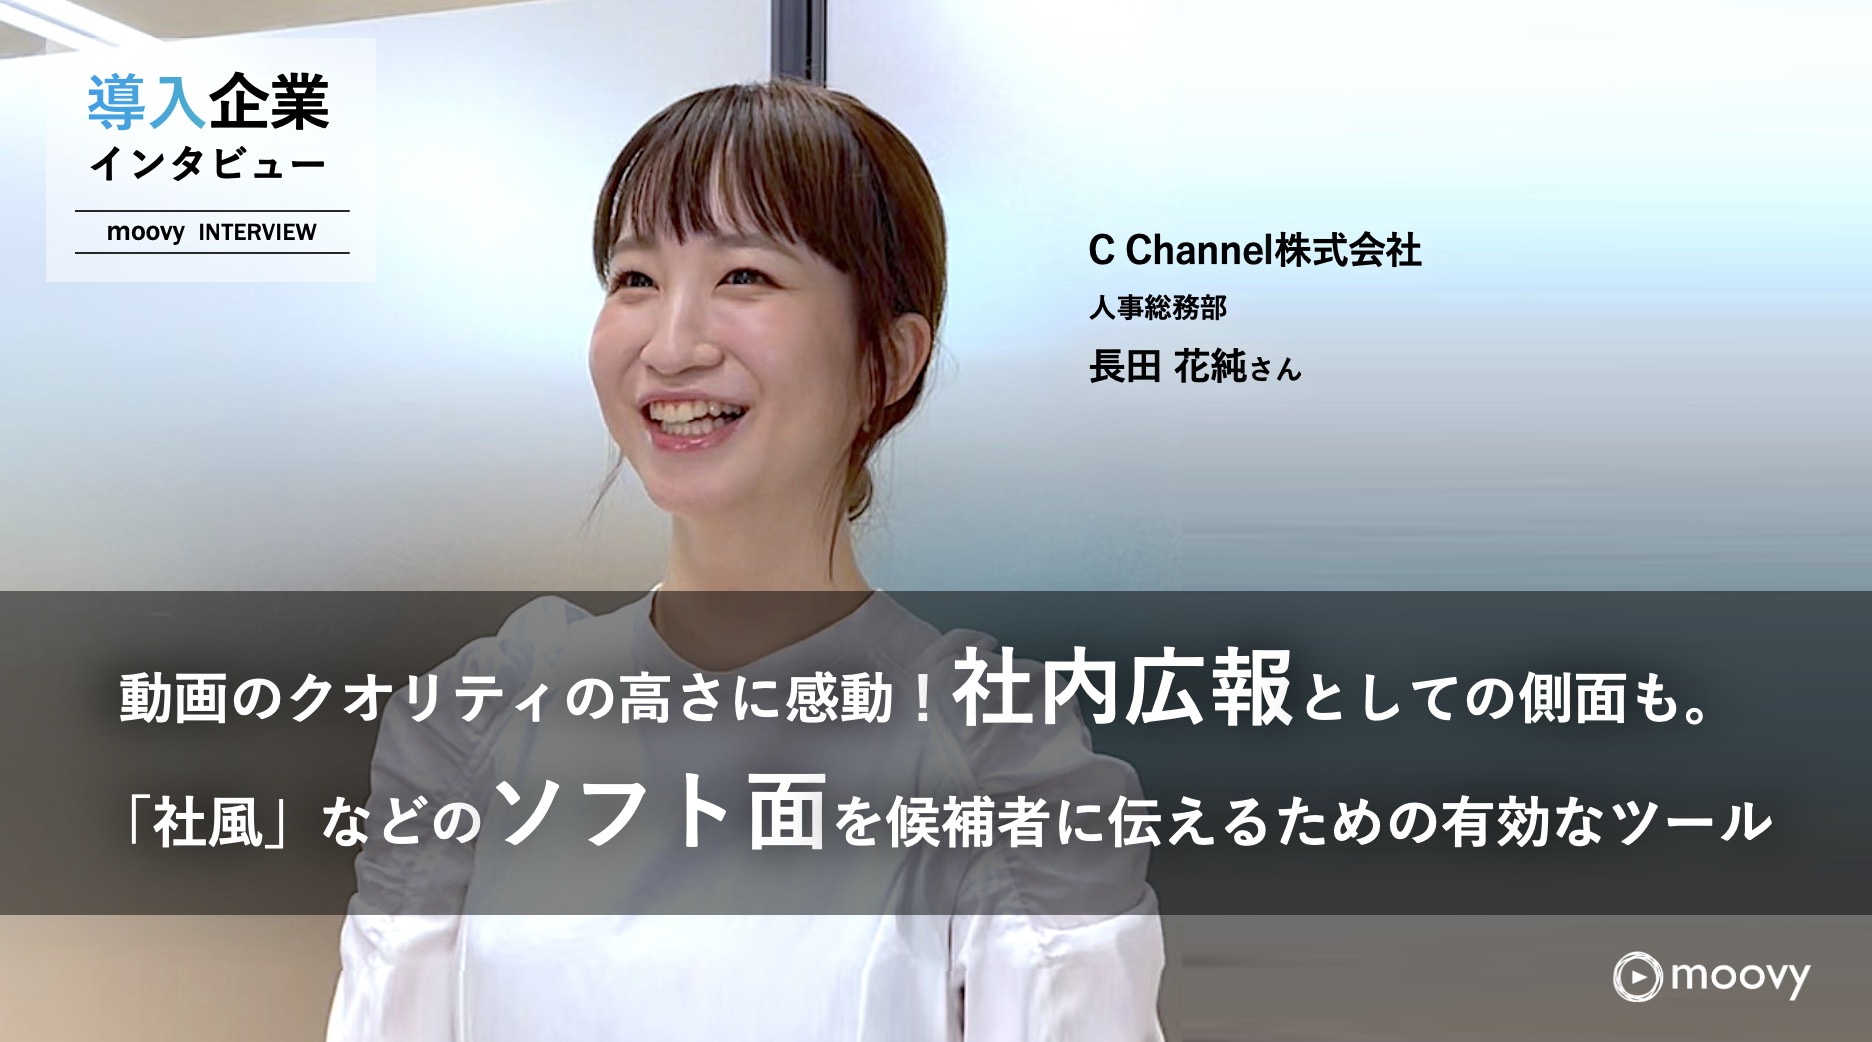 C Channel株式会社記事サムネイル